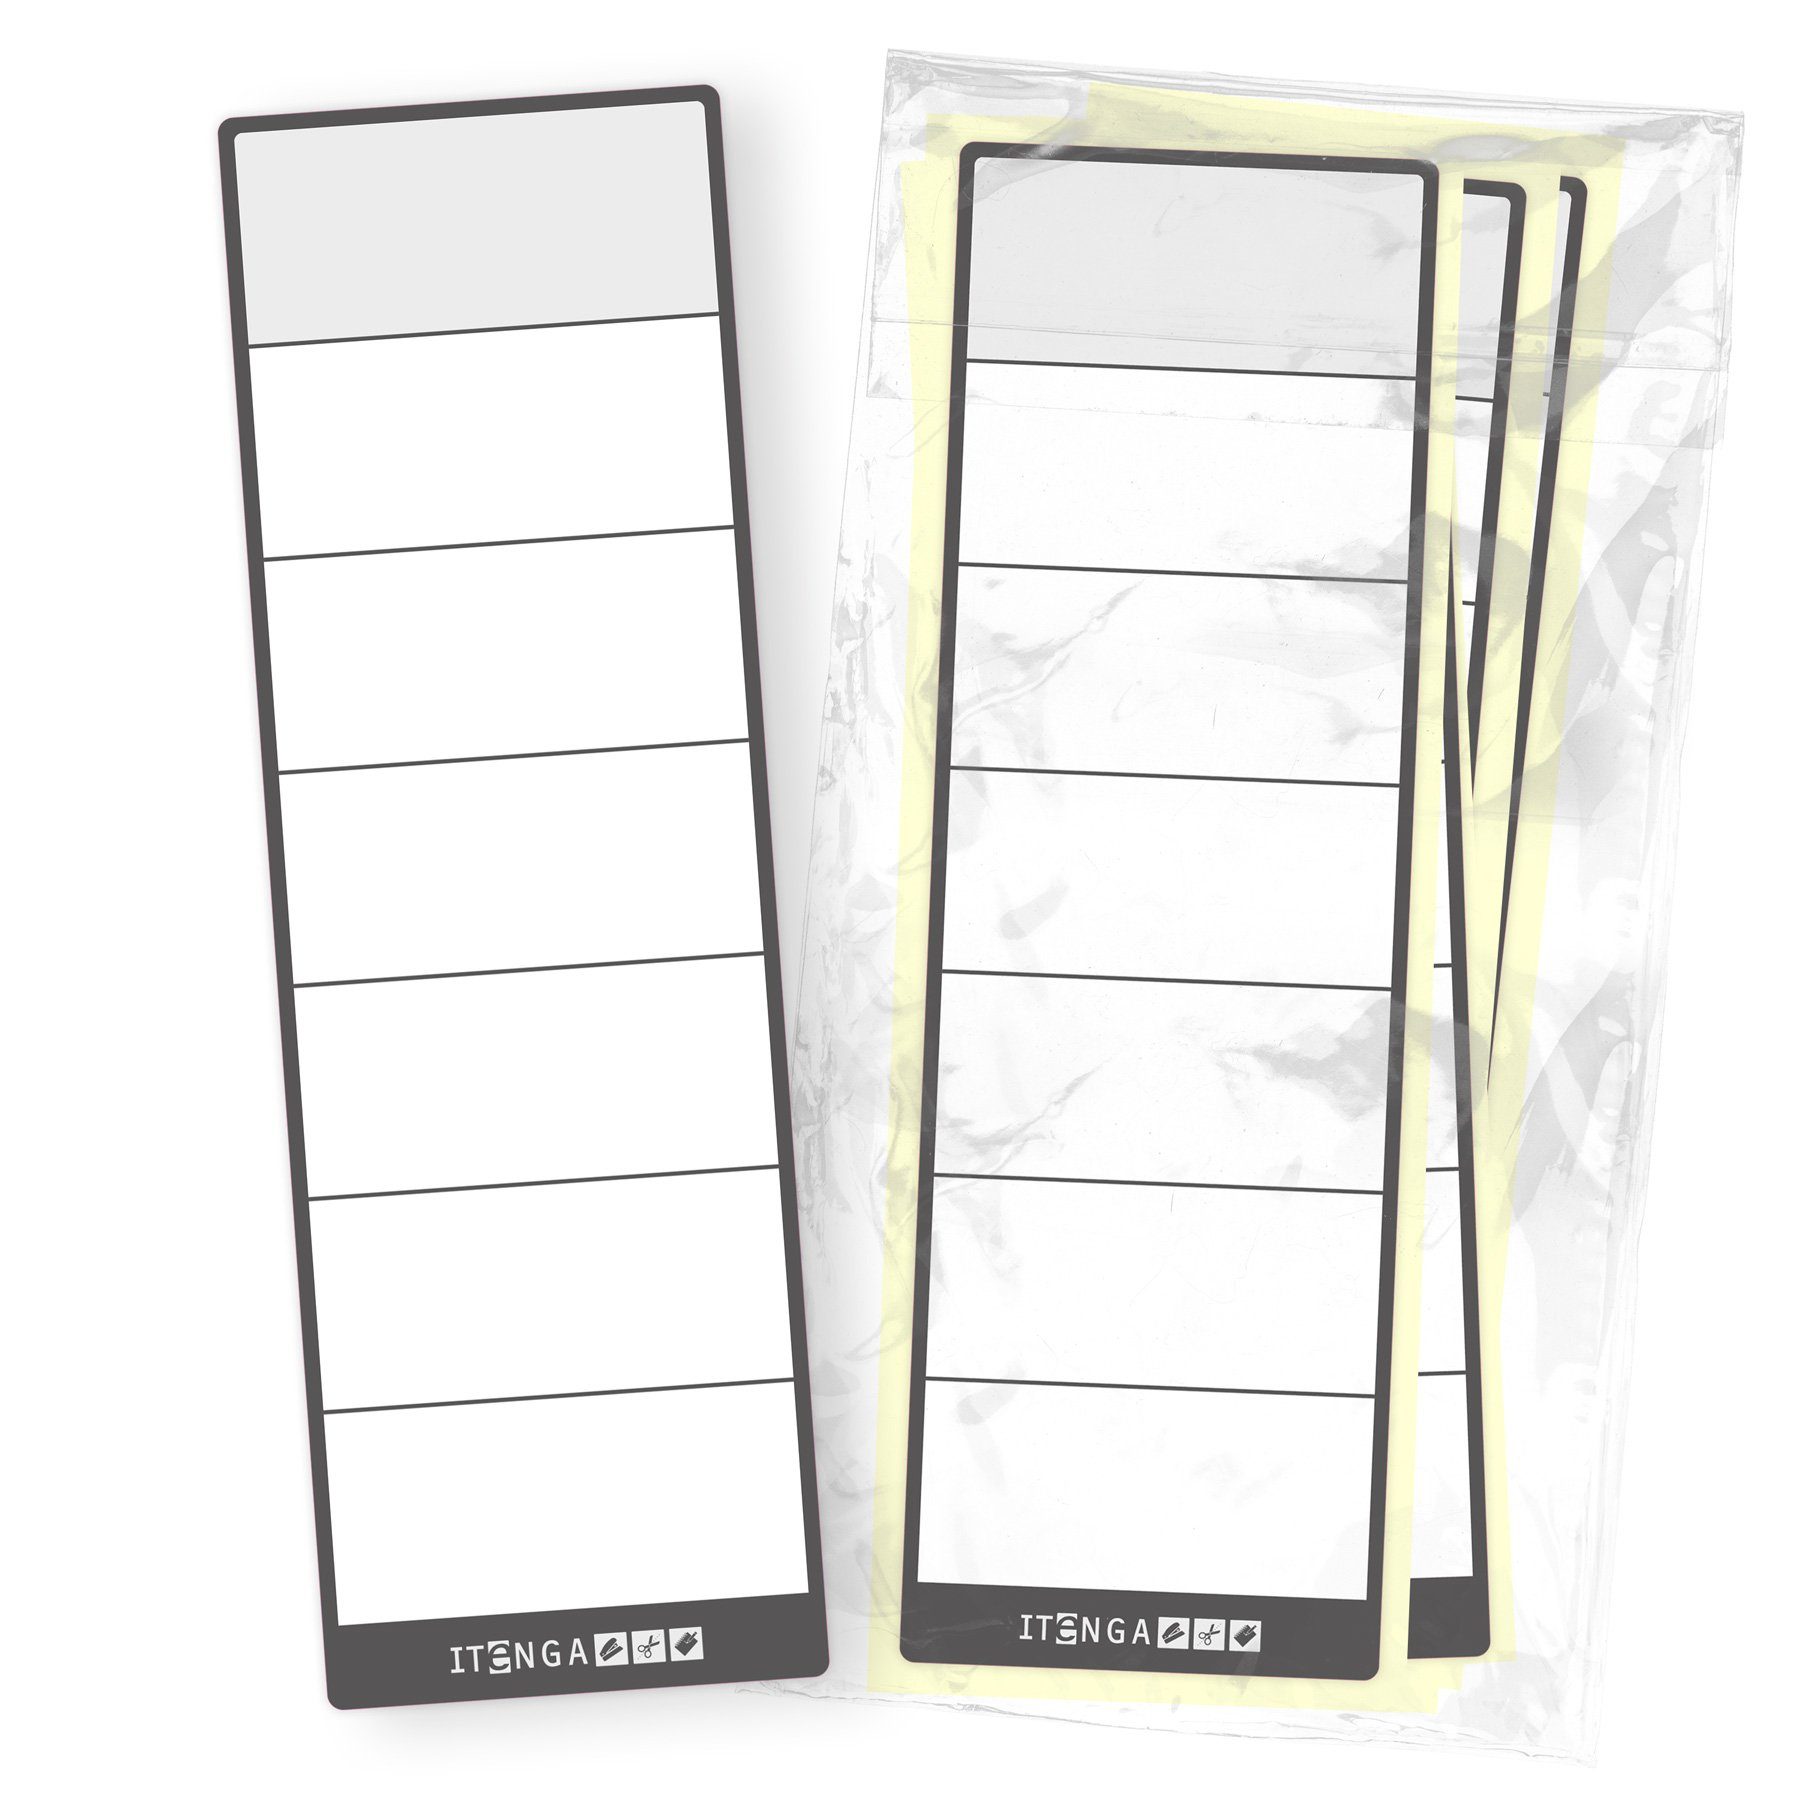 itenga Etiketten itenga 10x Ordnerschild Rückenschild breit Aufkleber aus Haftpapier 6x